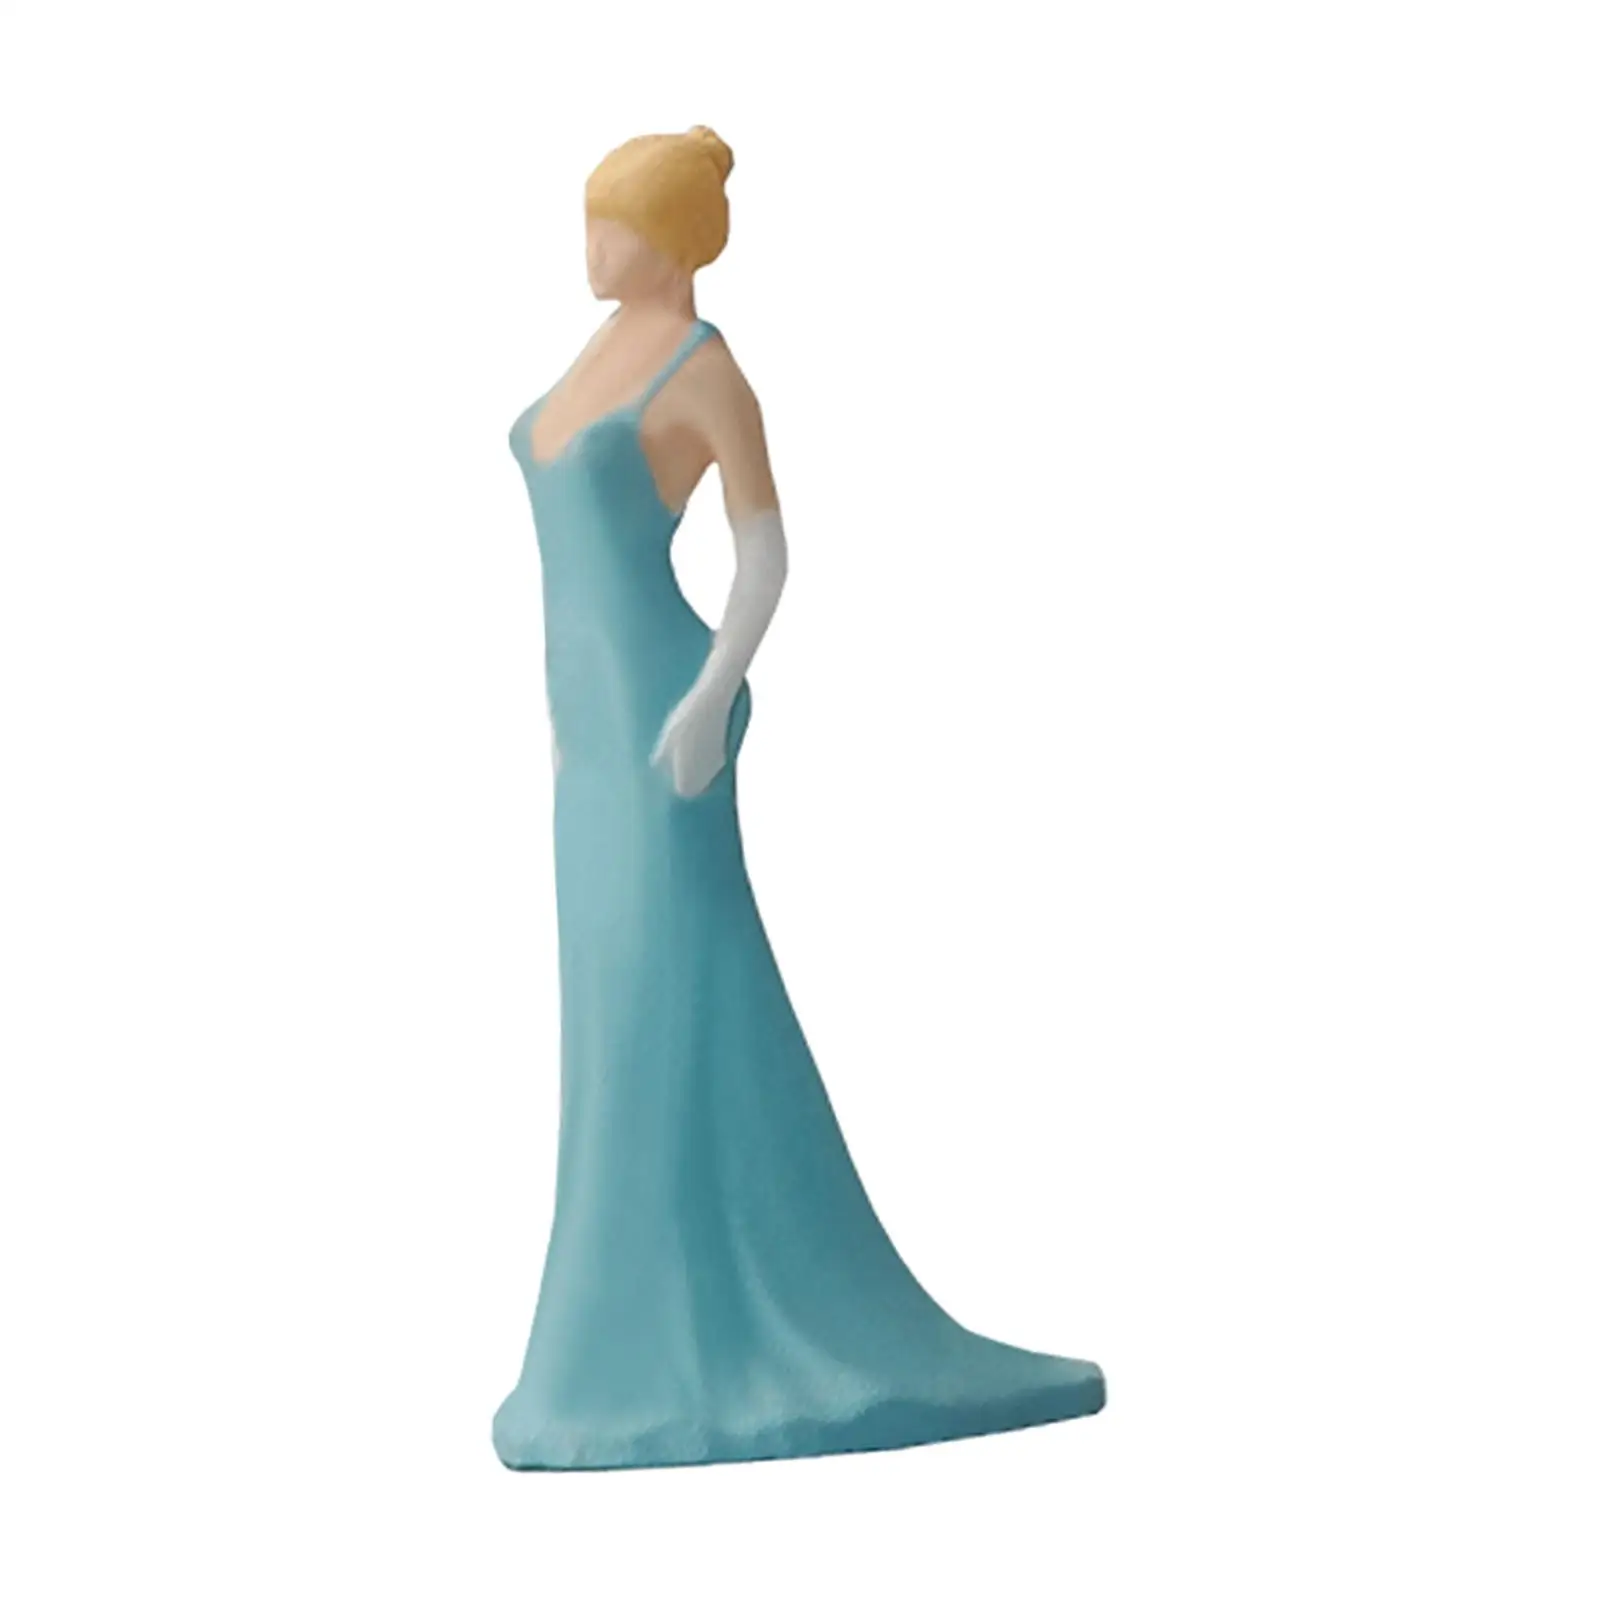 1/64 Scale Evening Dress Girl Model Tiny for Desktop Decoration Fairy Garden